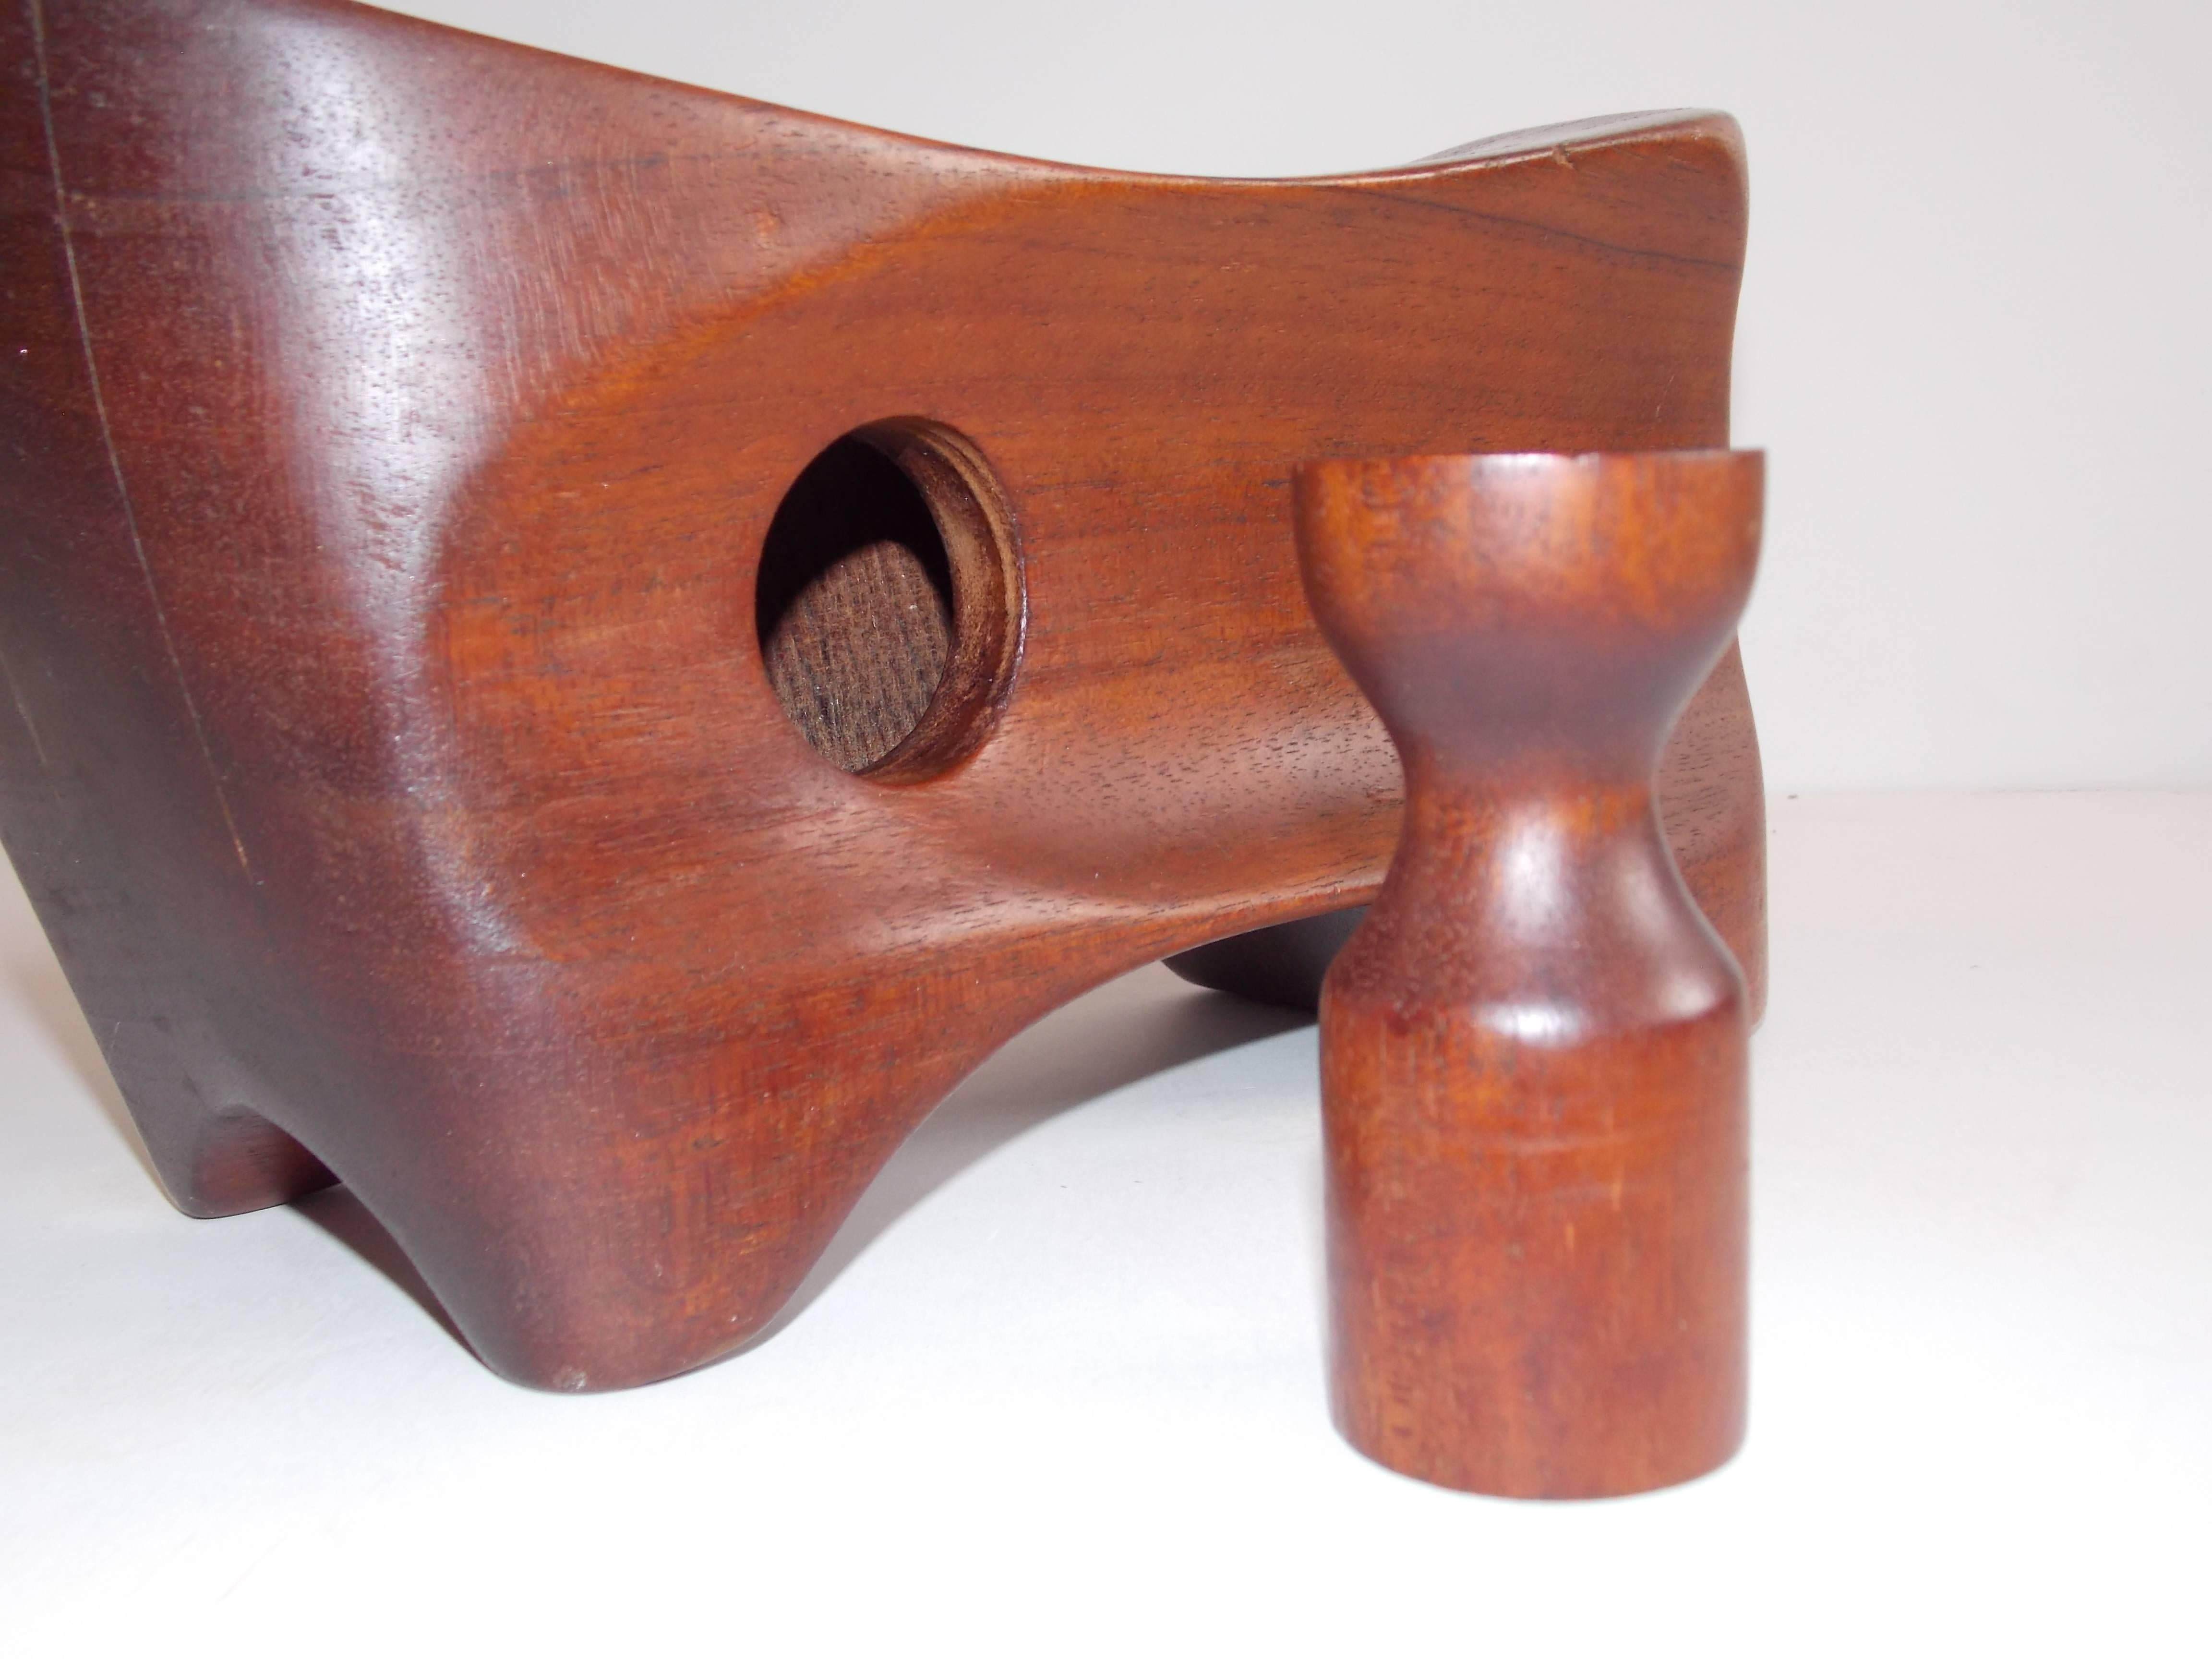 nice sculptural form and function design
handmade mahogany wood


 